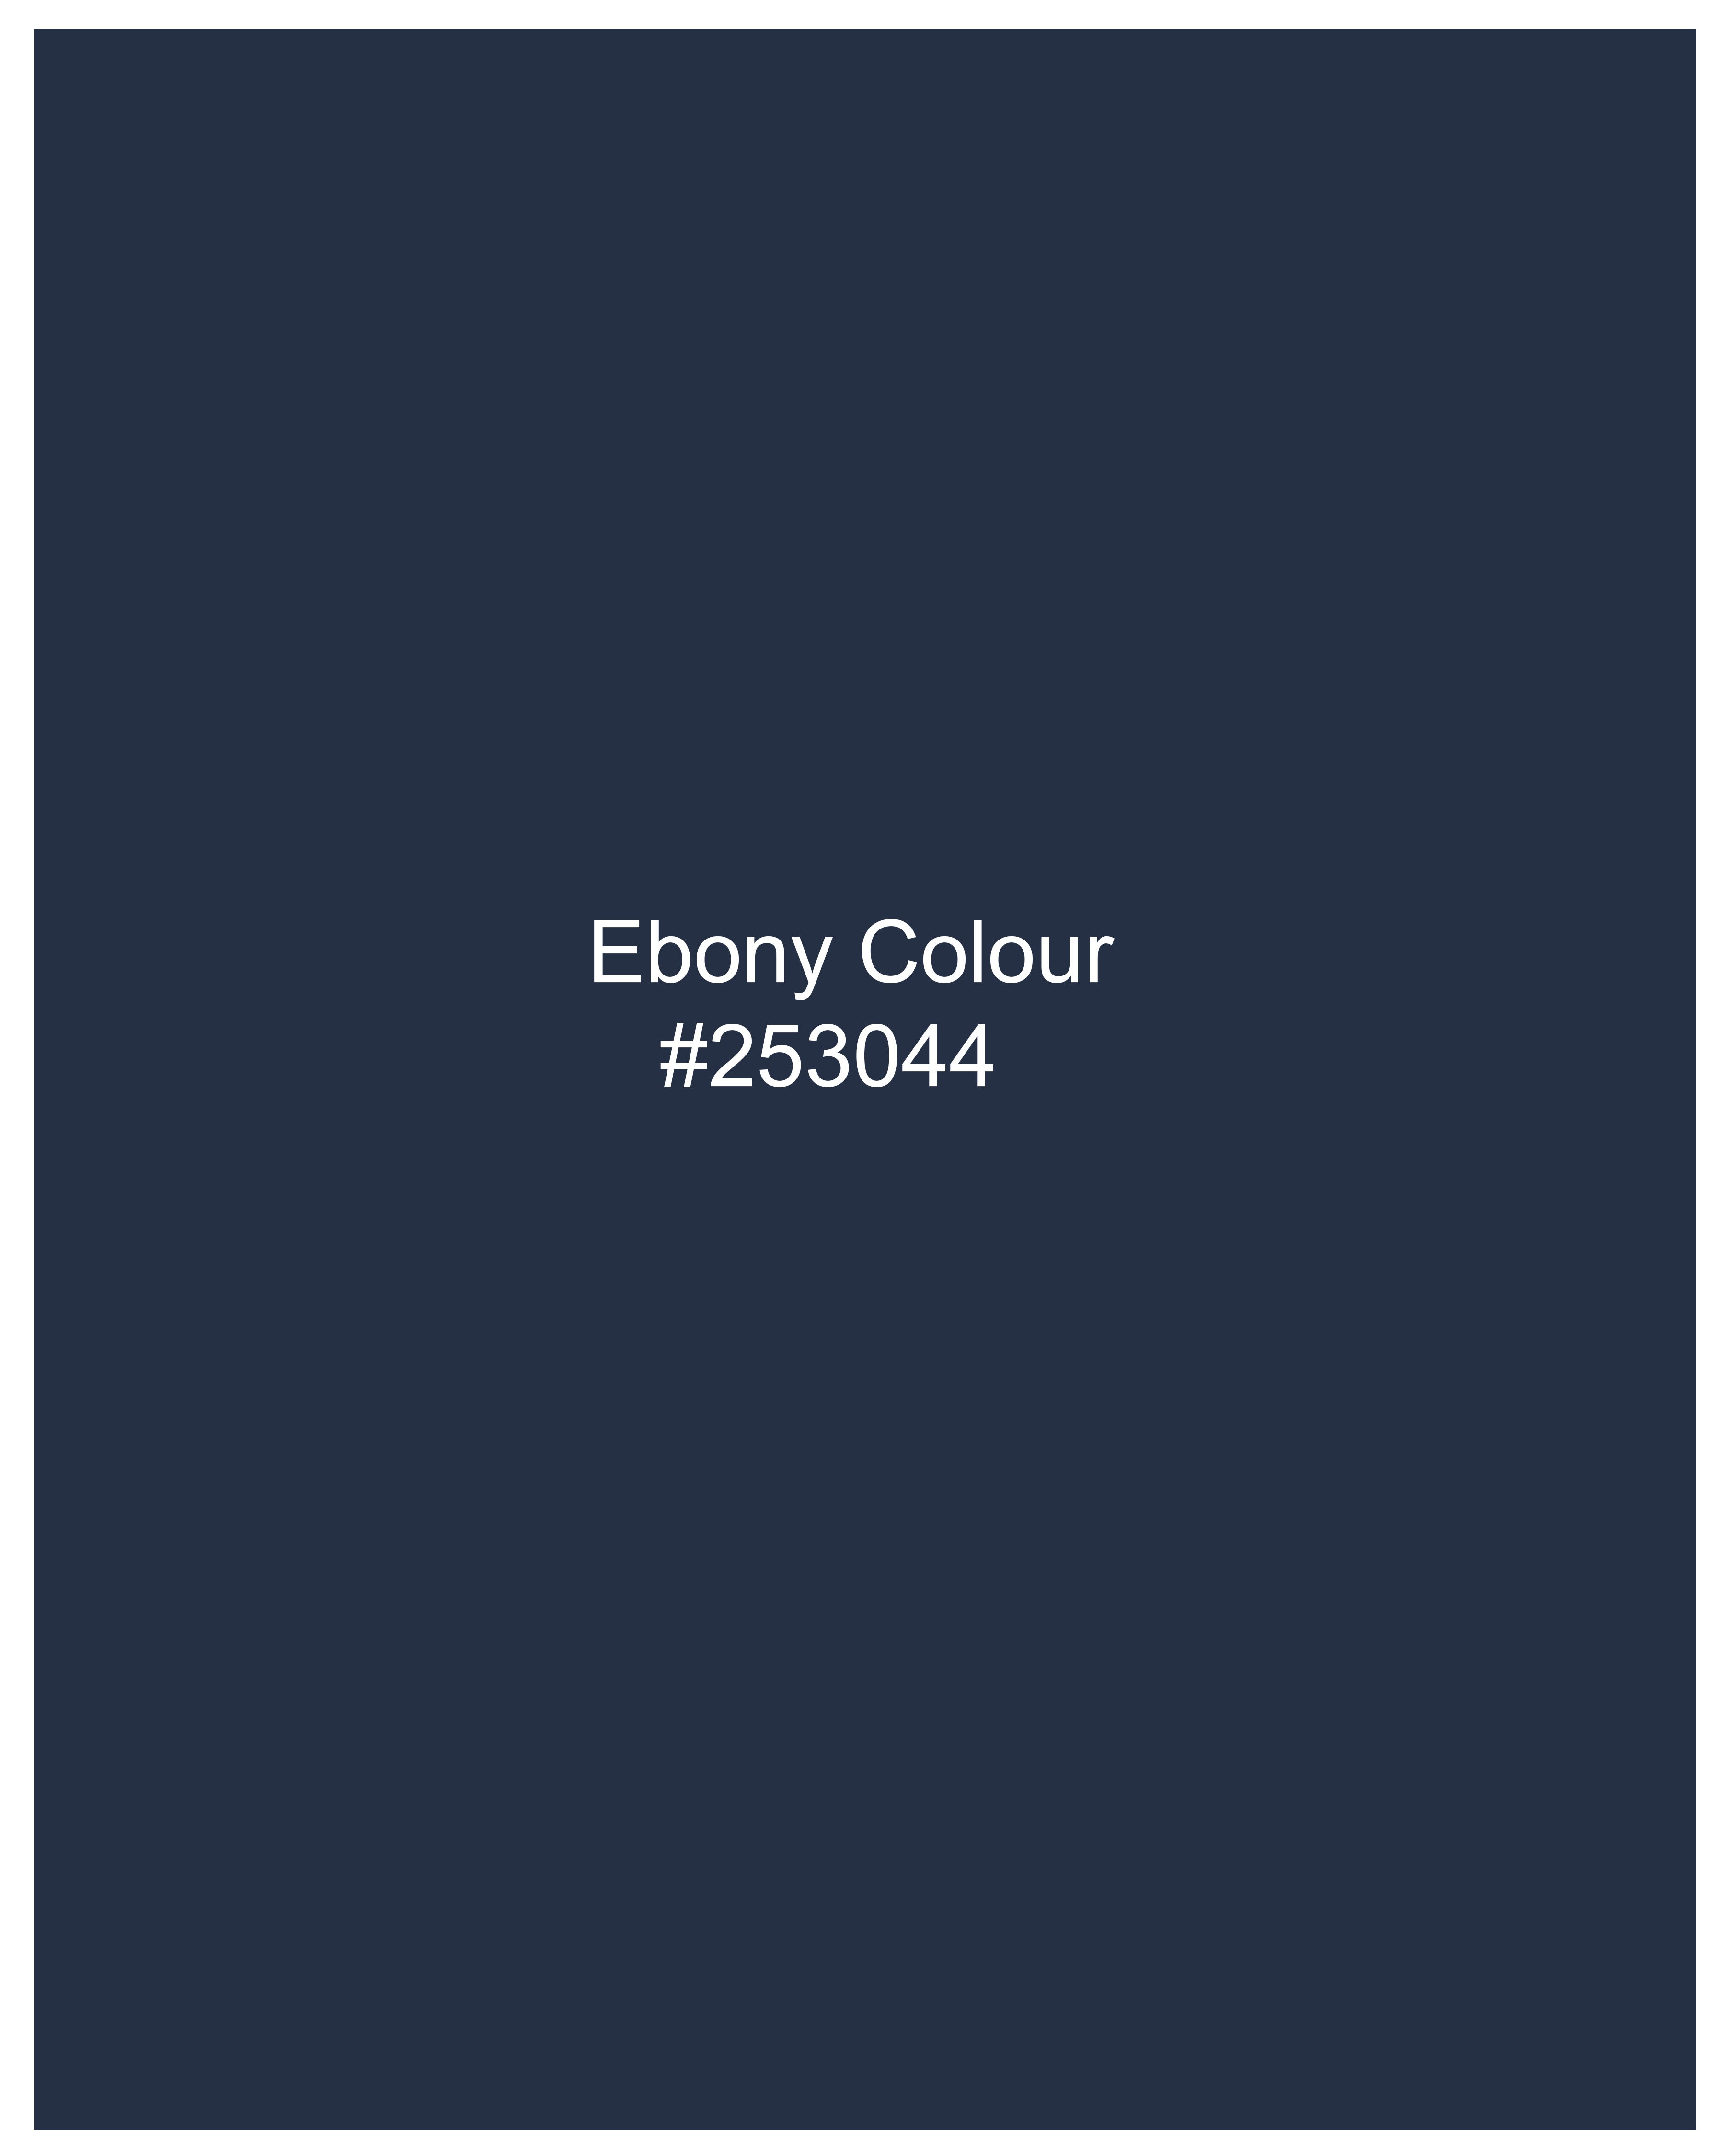 Ebony Blue Light Weights Denim Designer Overshirt         9096-38, 9096-H-38, 9096-39, 9096-H-39, 9096-40, 9096-H-40, 9096-42, 9096-H-42, 9096-44, 9096-H-44, 9096-46, 9096-H-46, 9096-48, 9096-H-48, 9096-50, 9096-H-50, 9096-52, 9096-H-52